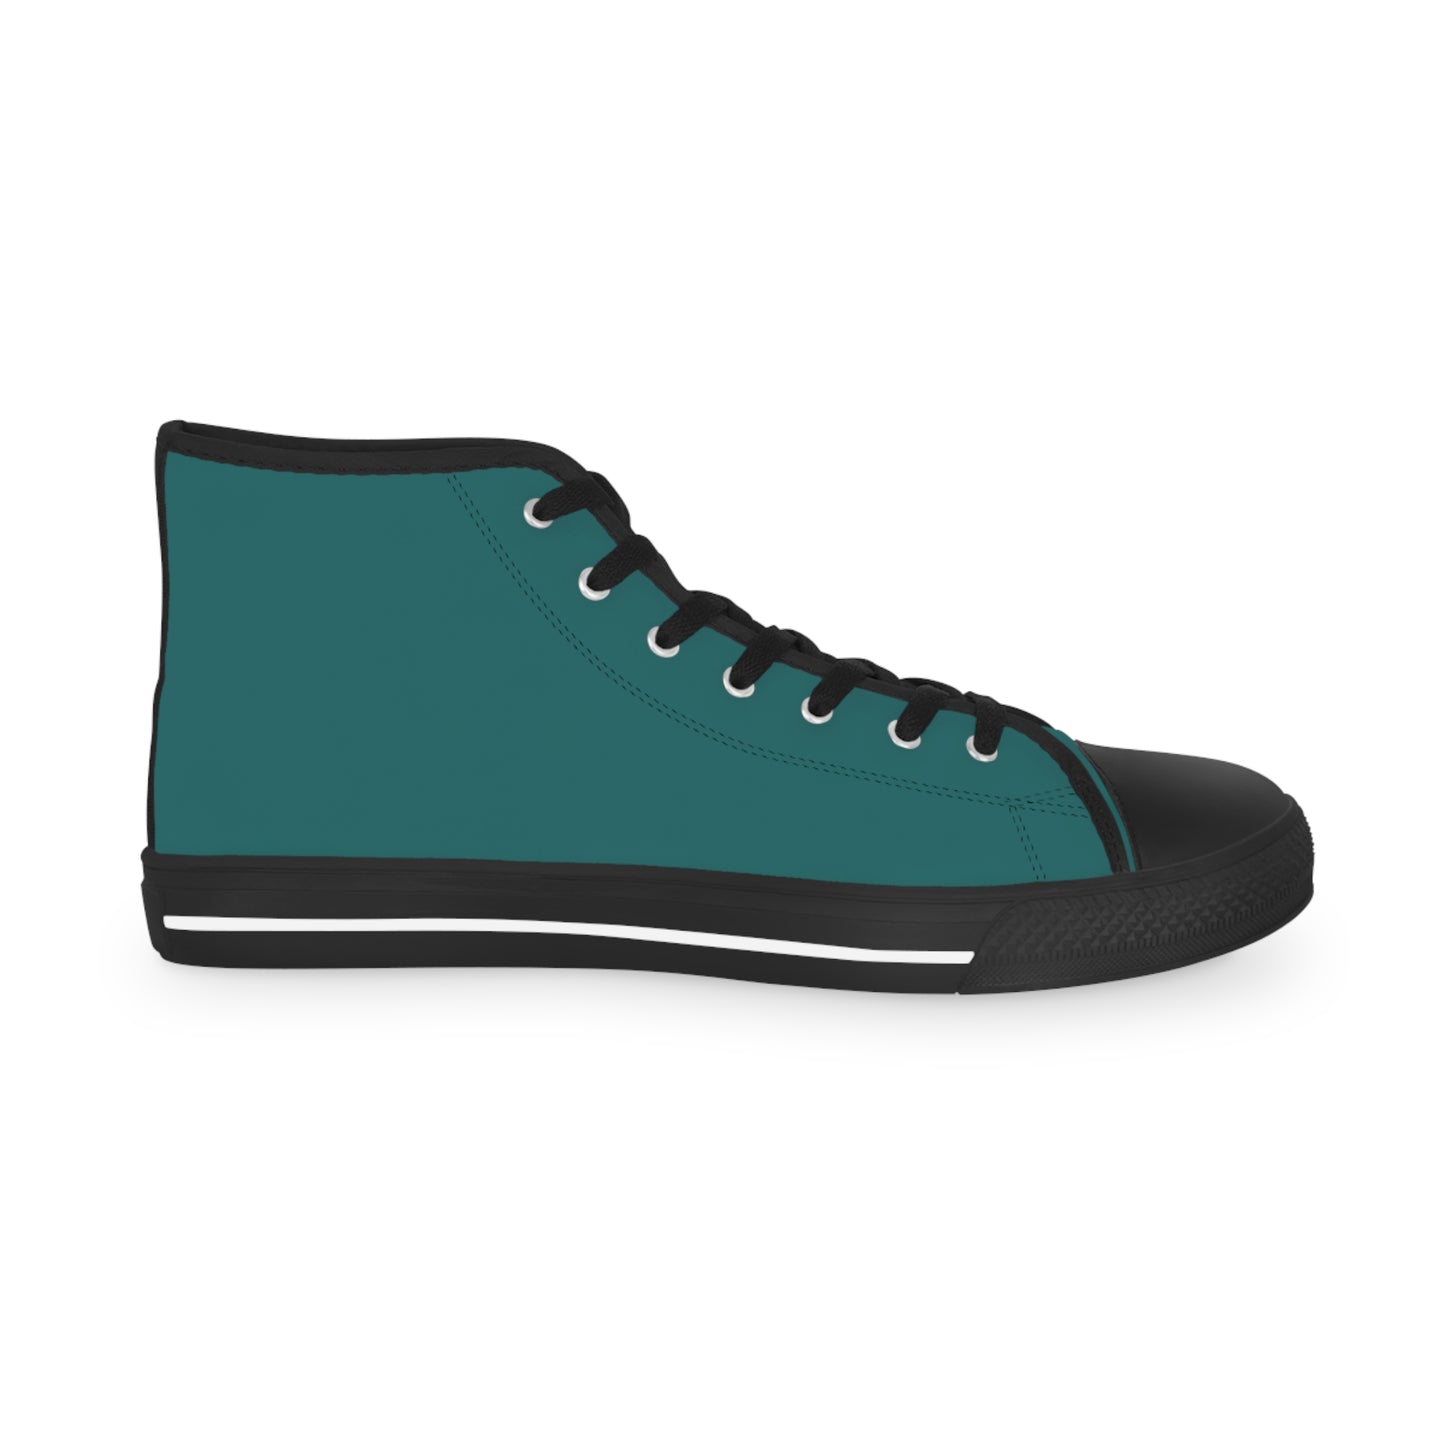 Men's High Top Sneakers - Dark Teal US 14 White sole